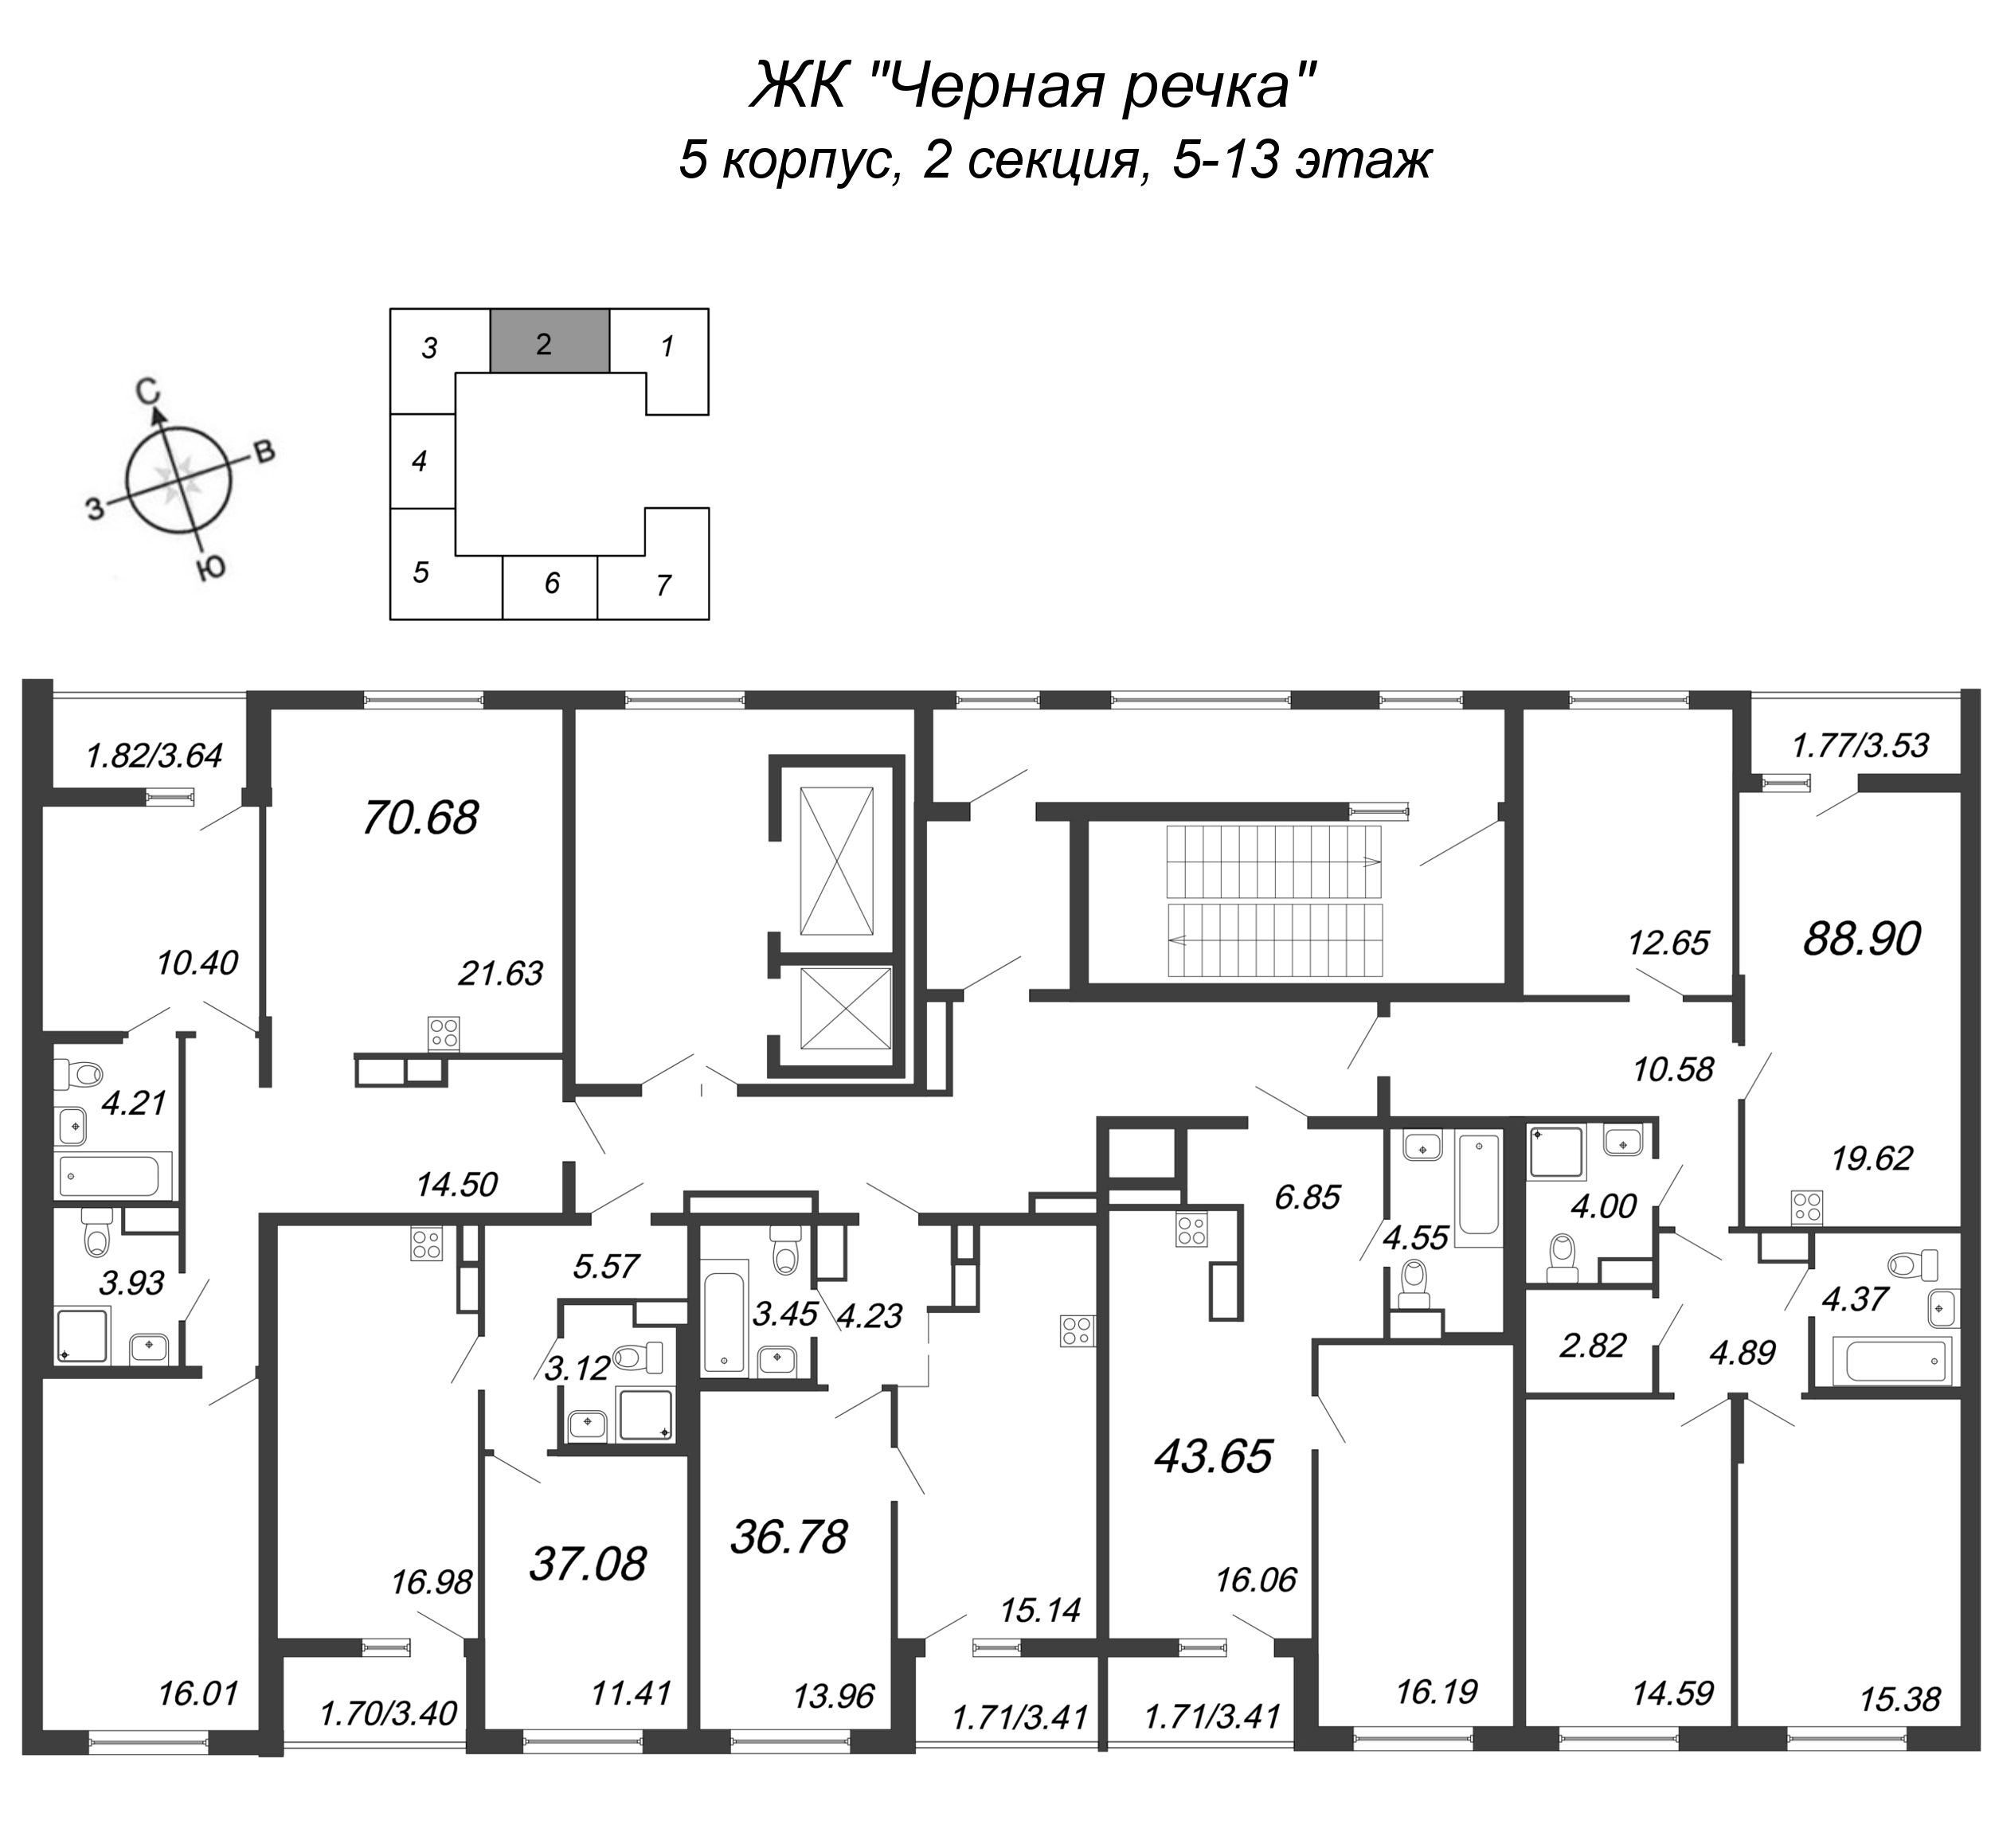 4-комнатная (Евро) квартира, 88.9 м² в ЖК "Чёрная речка от Ильича" - планировка этажа